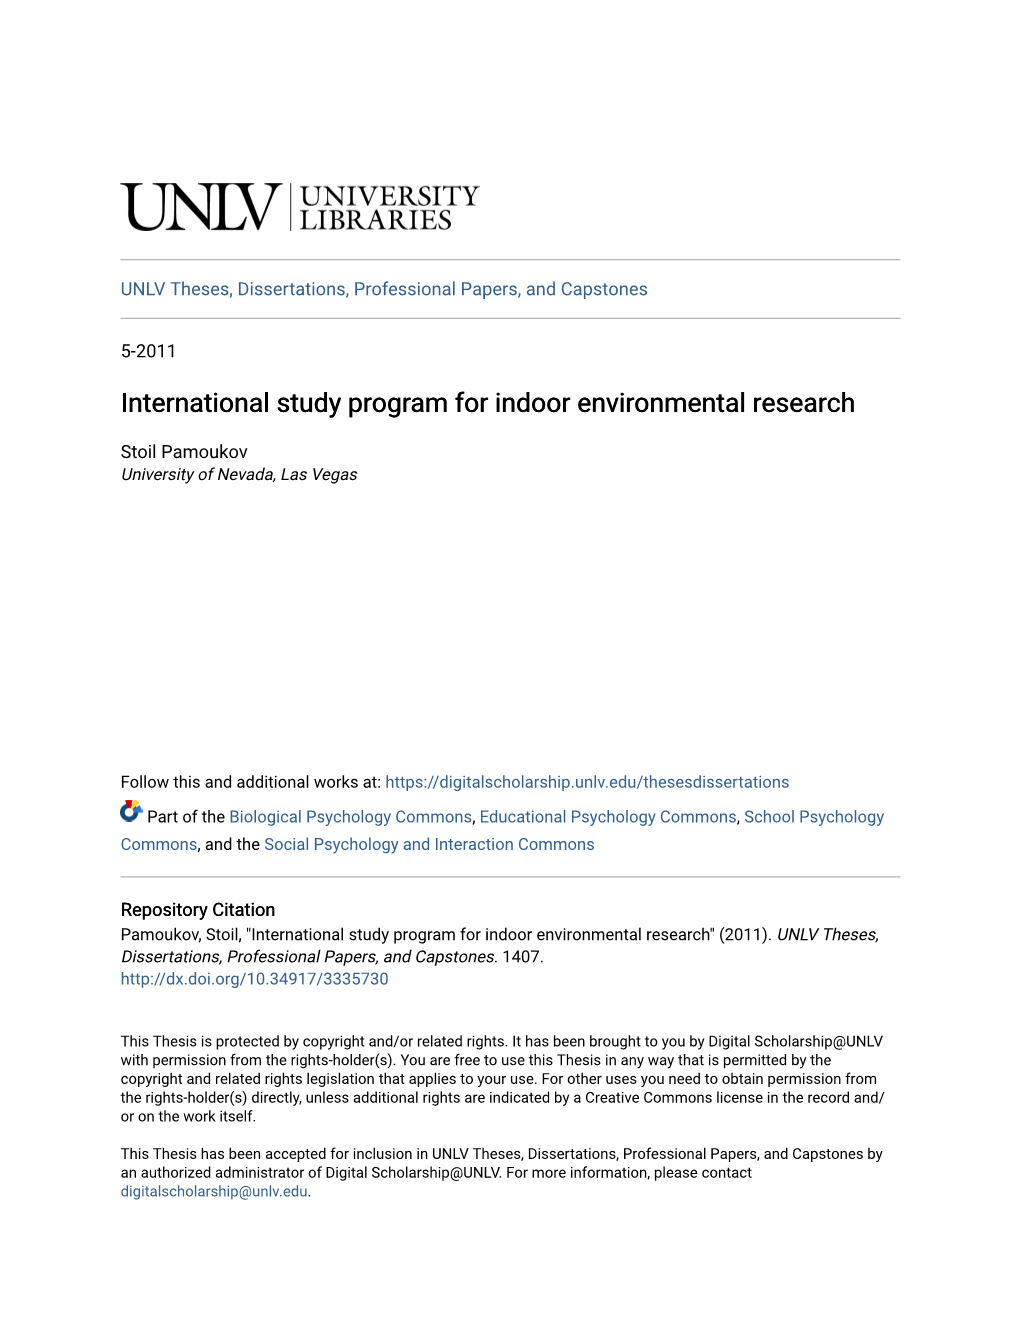 International Study Program for Indoor Environmental Research